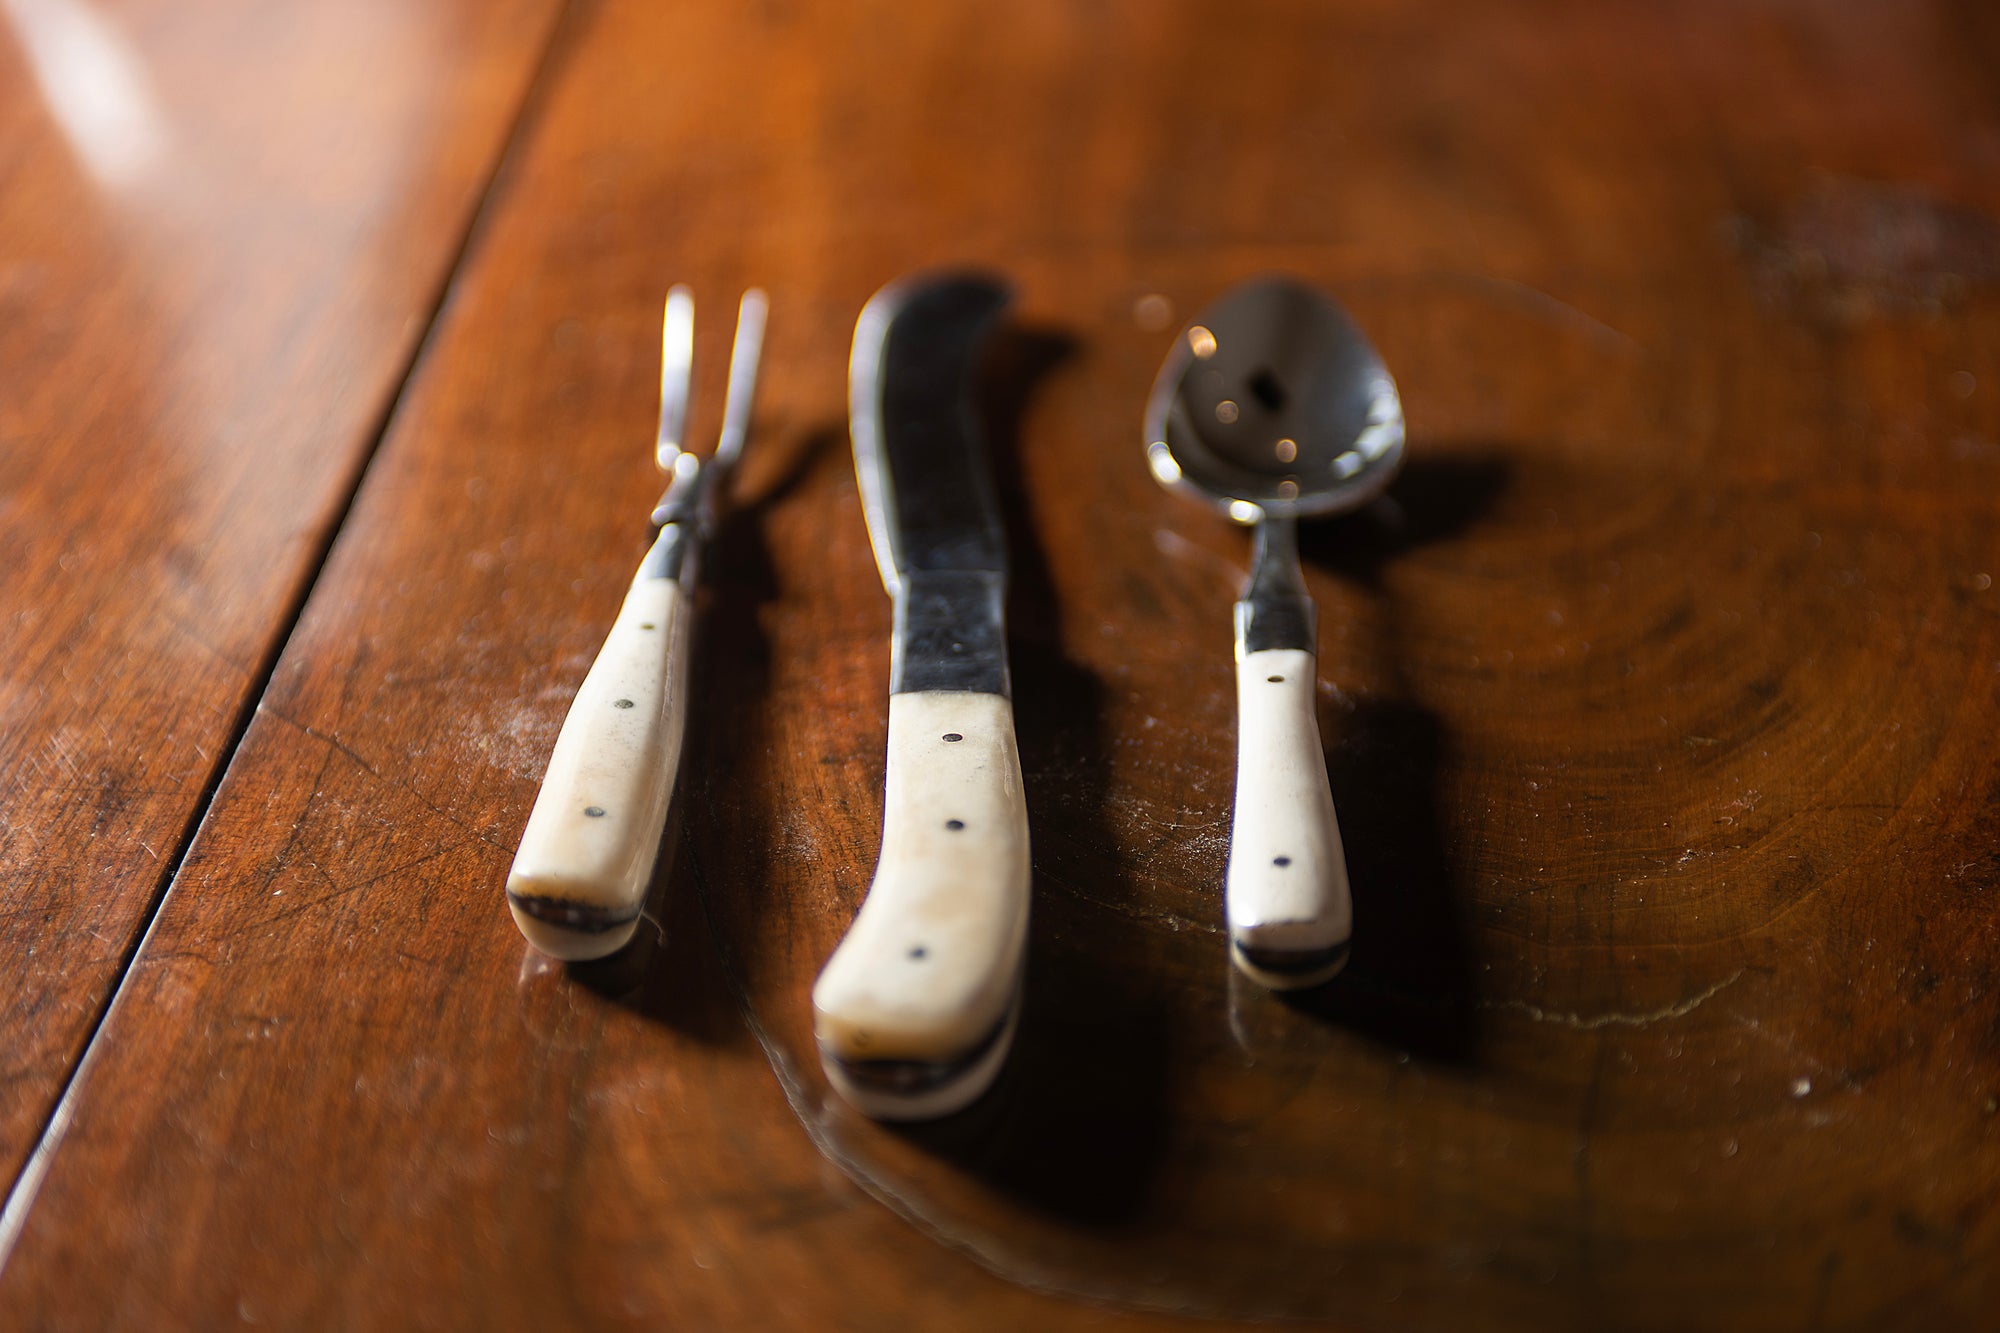 Bone Handled Cutlery Set